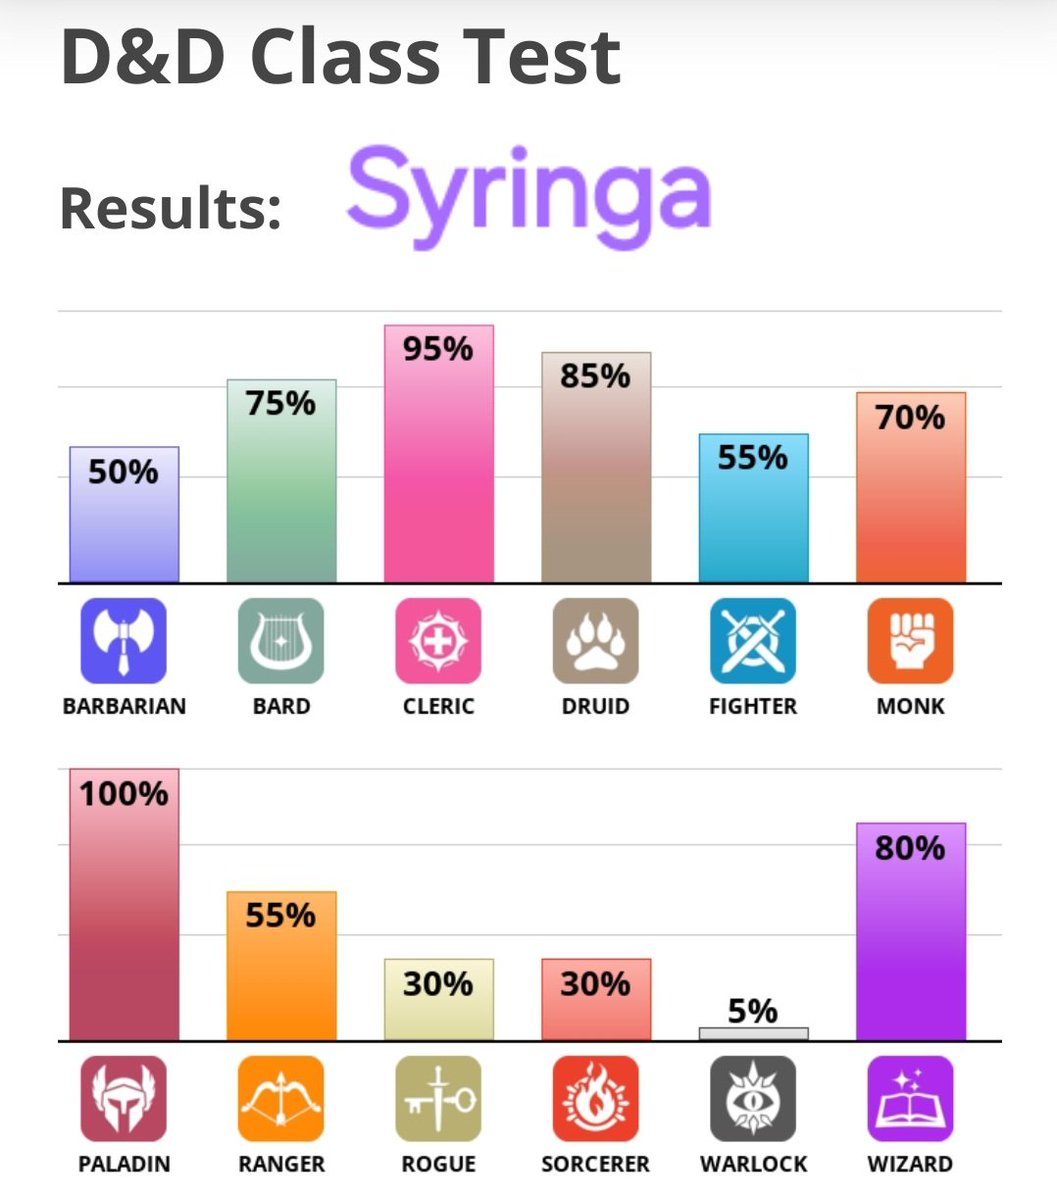 syringa, the most un-warlock-like warlock ever lmao